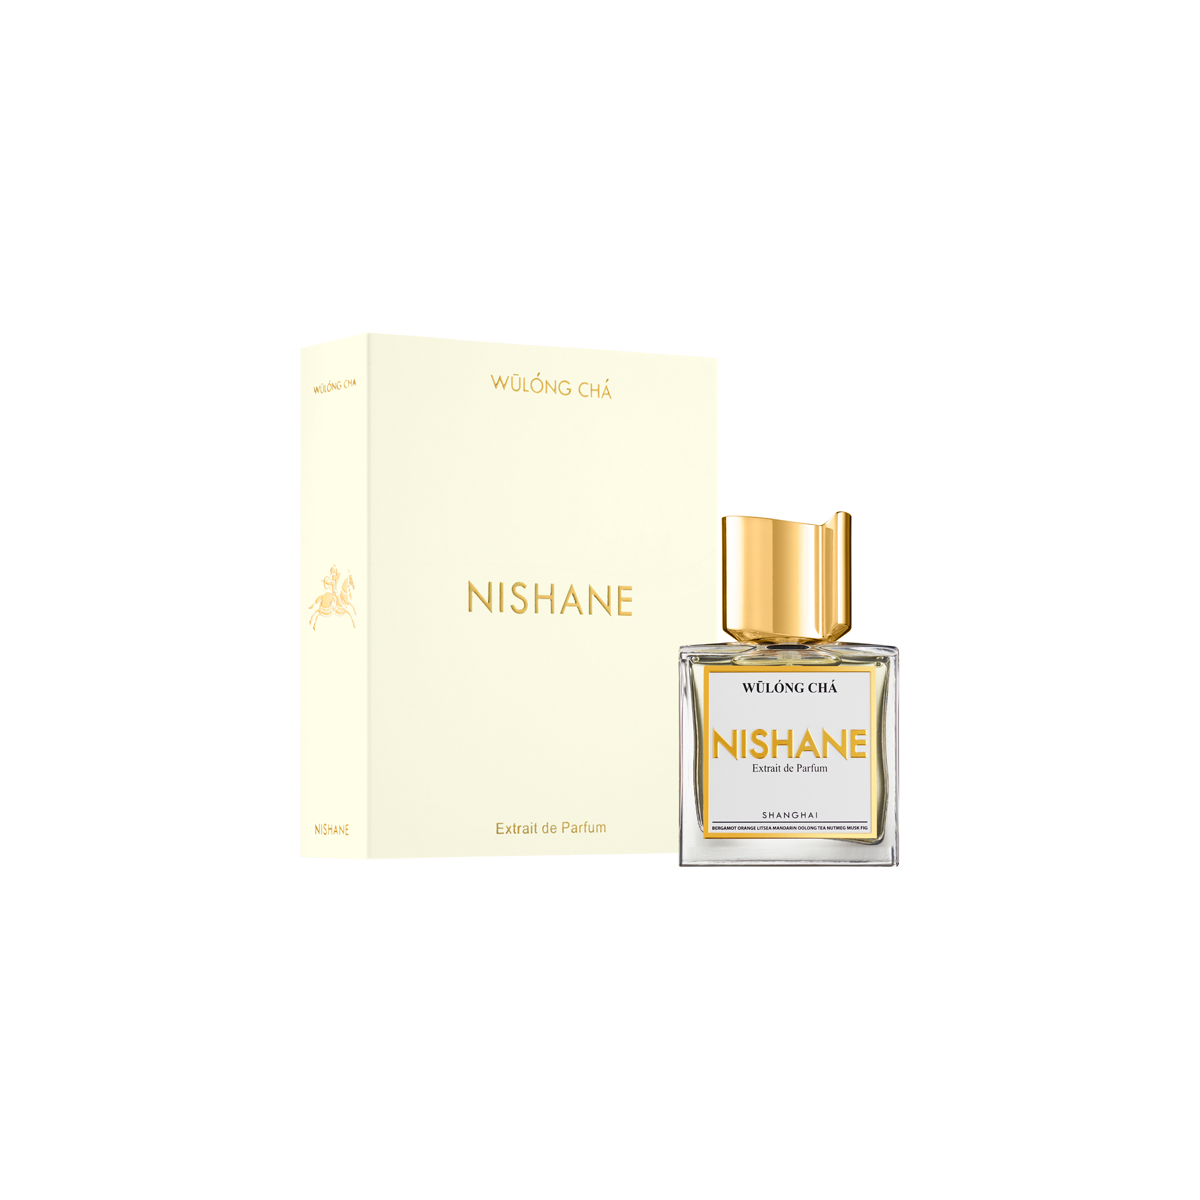 Nishane - Wulong Cha Extrait de Parfum